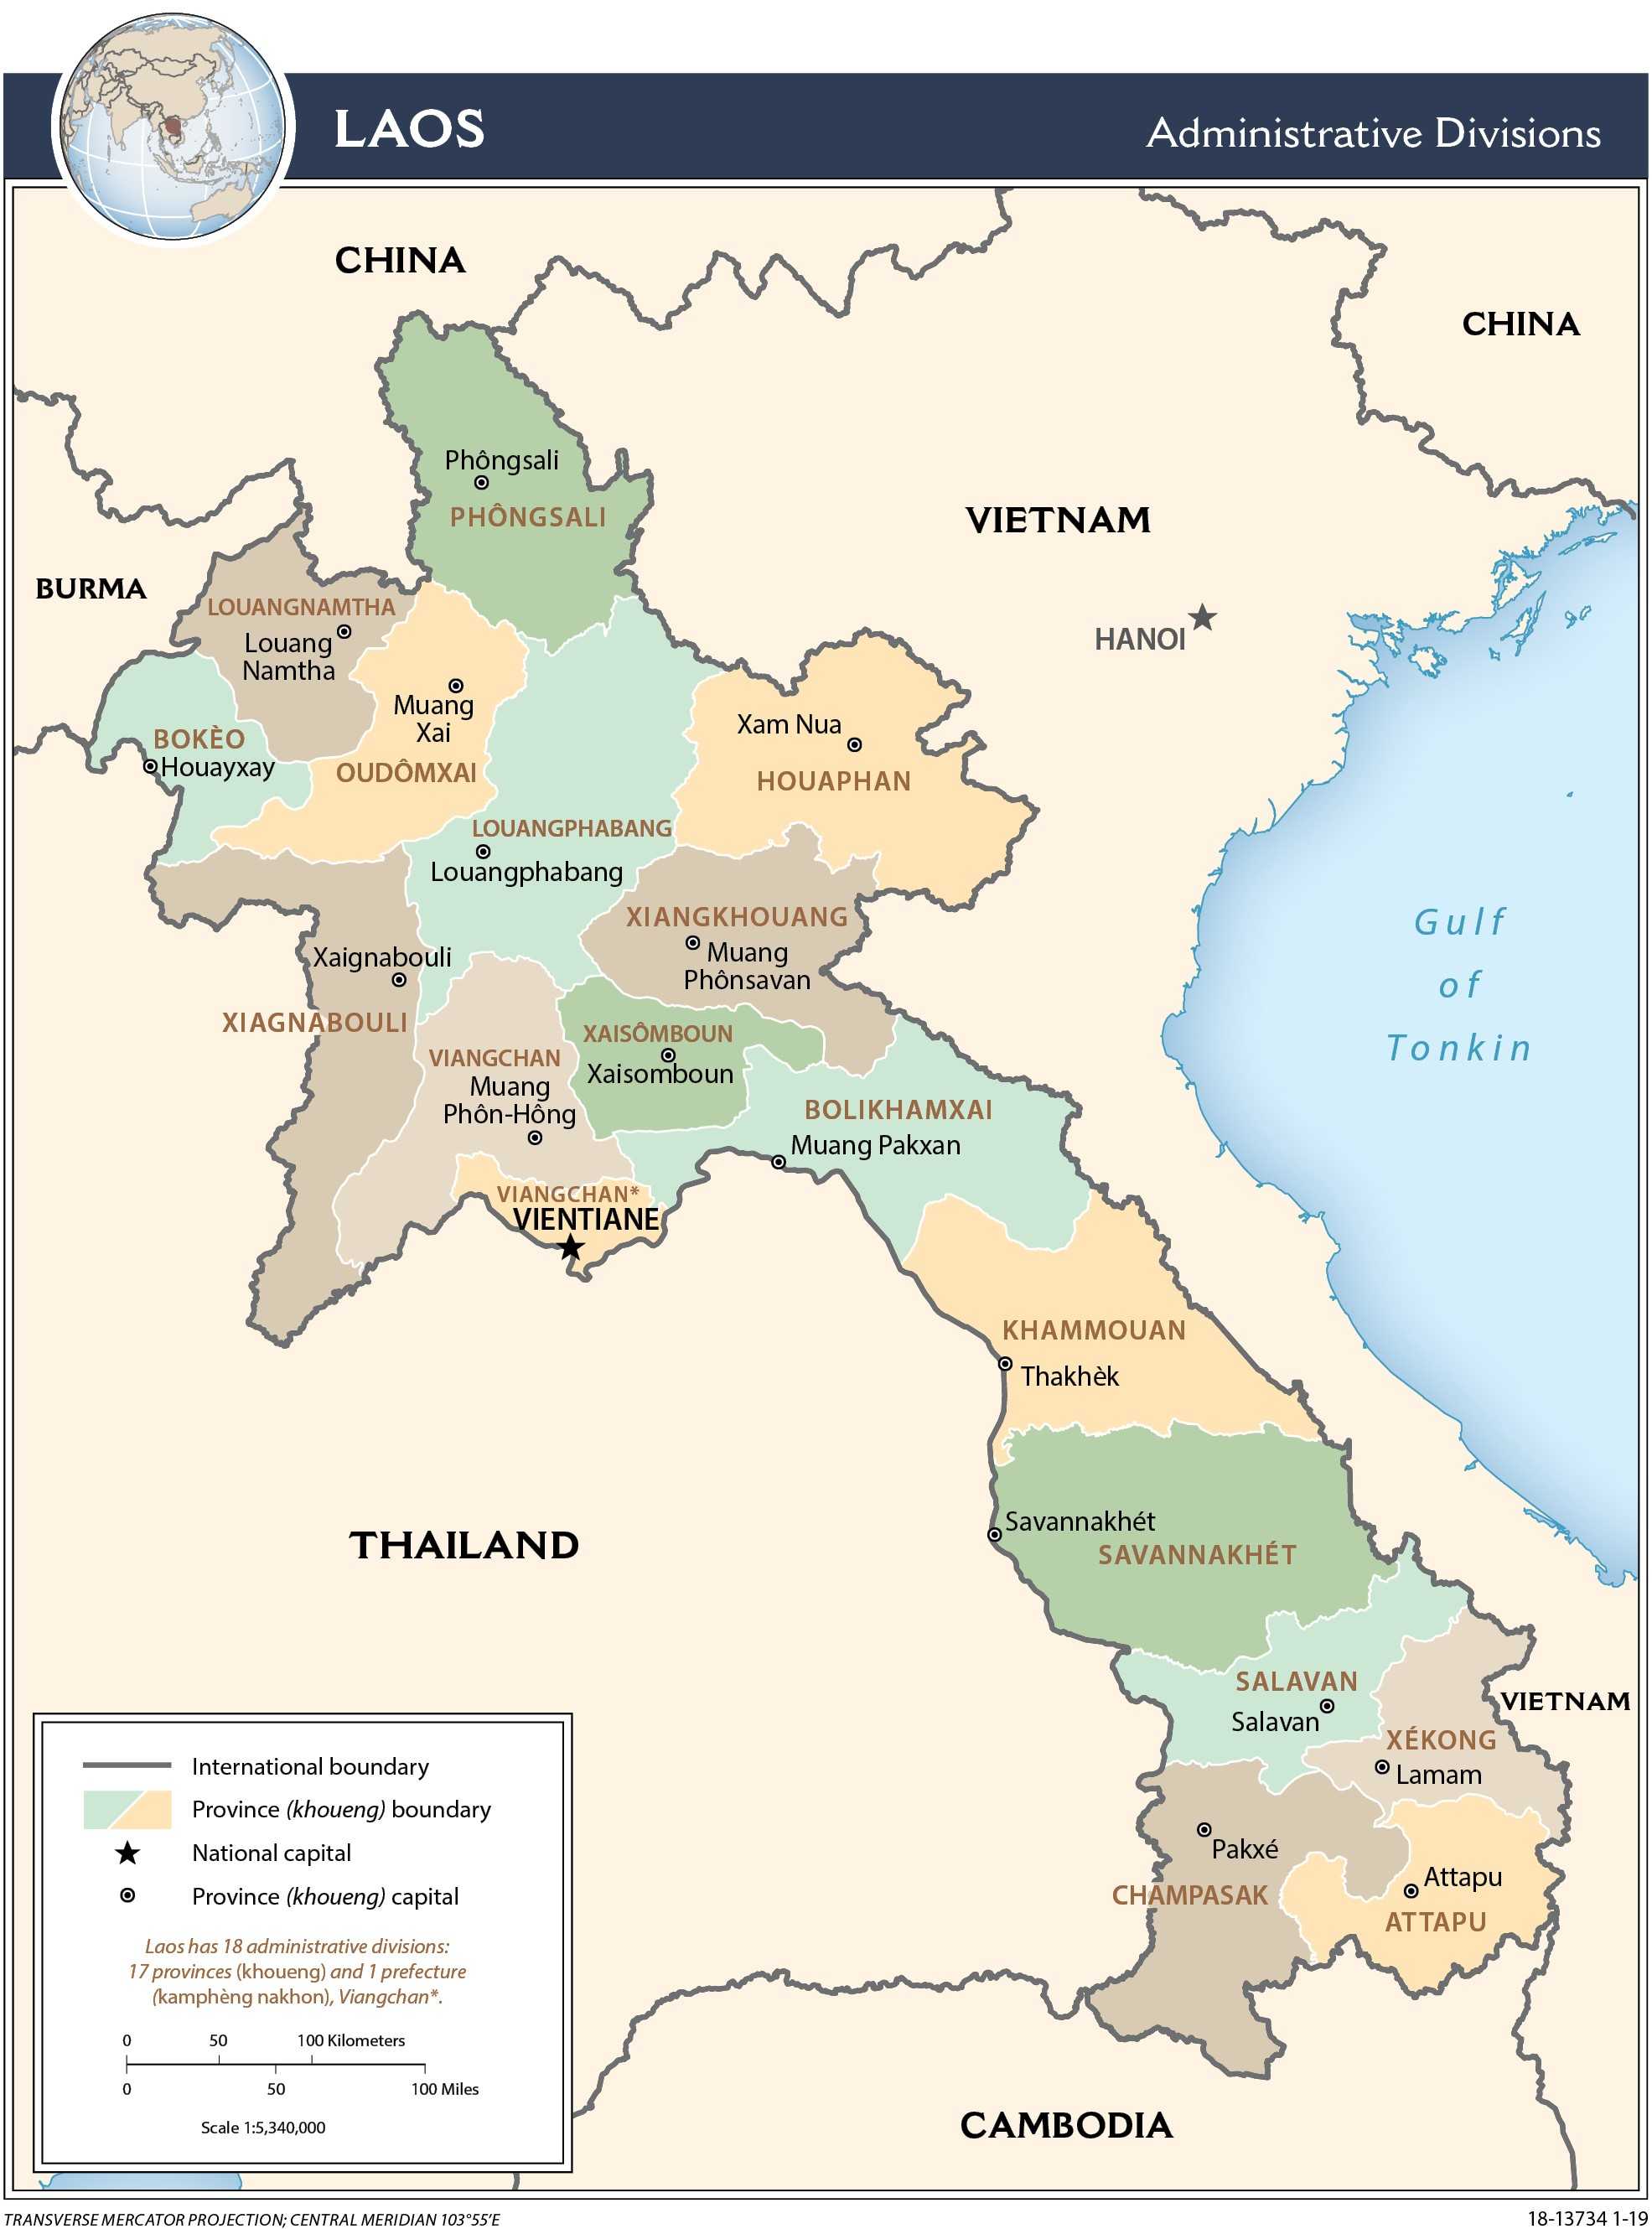 Administrative map of Laos.